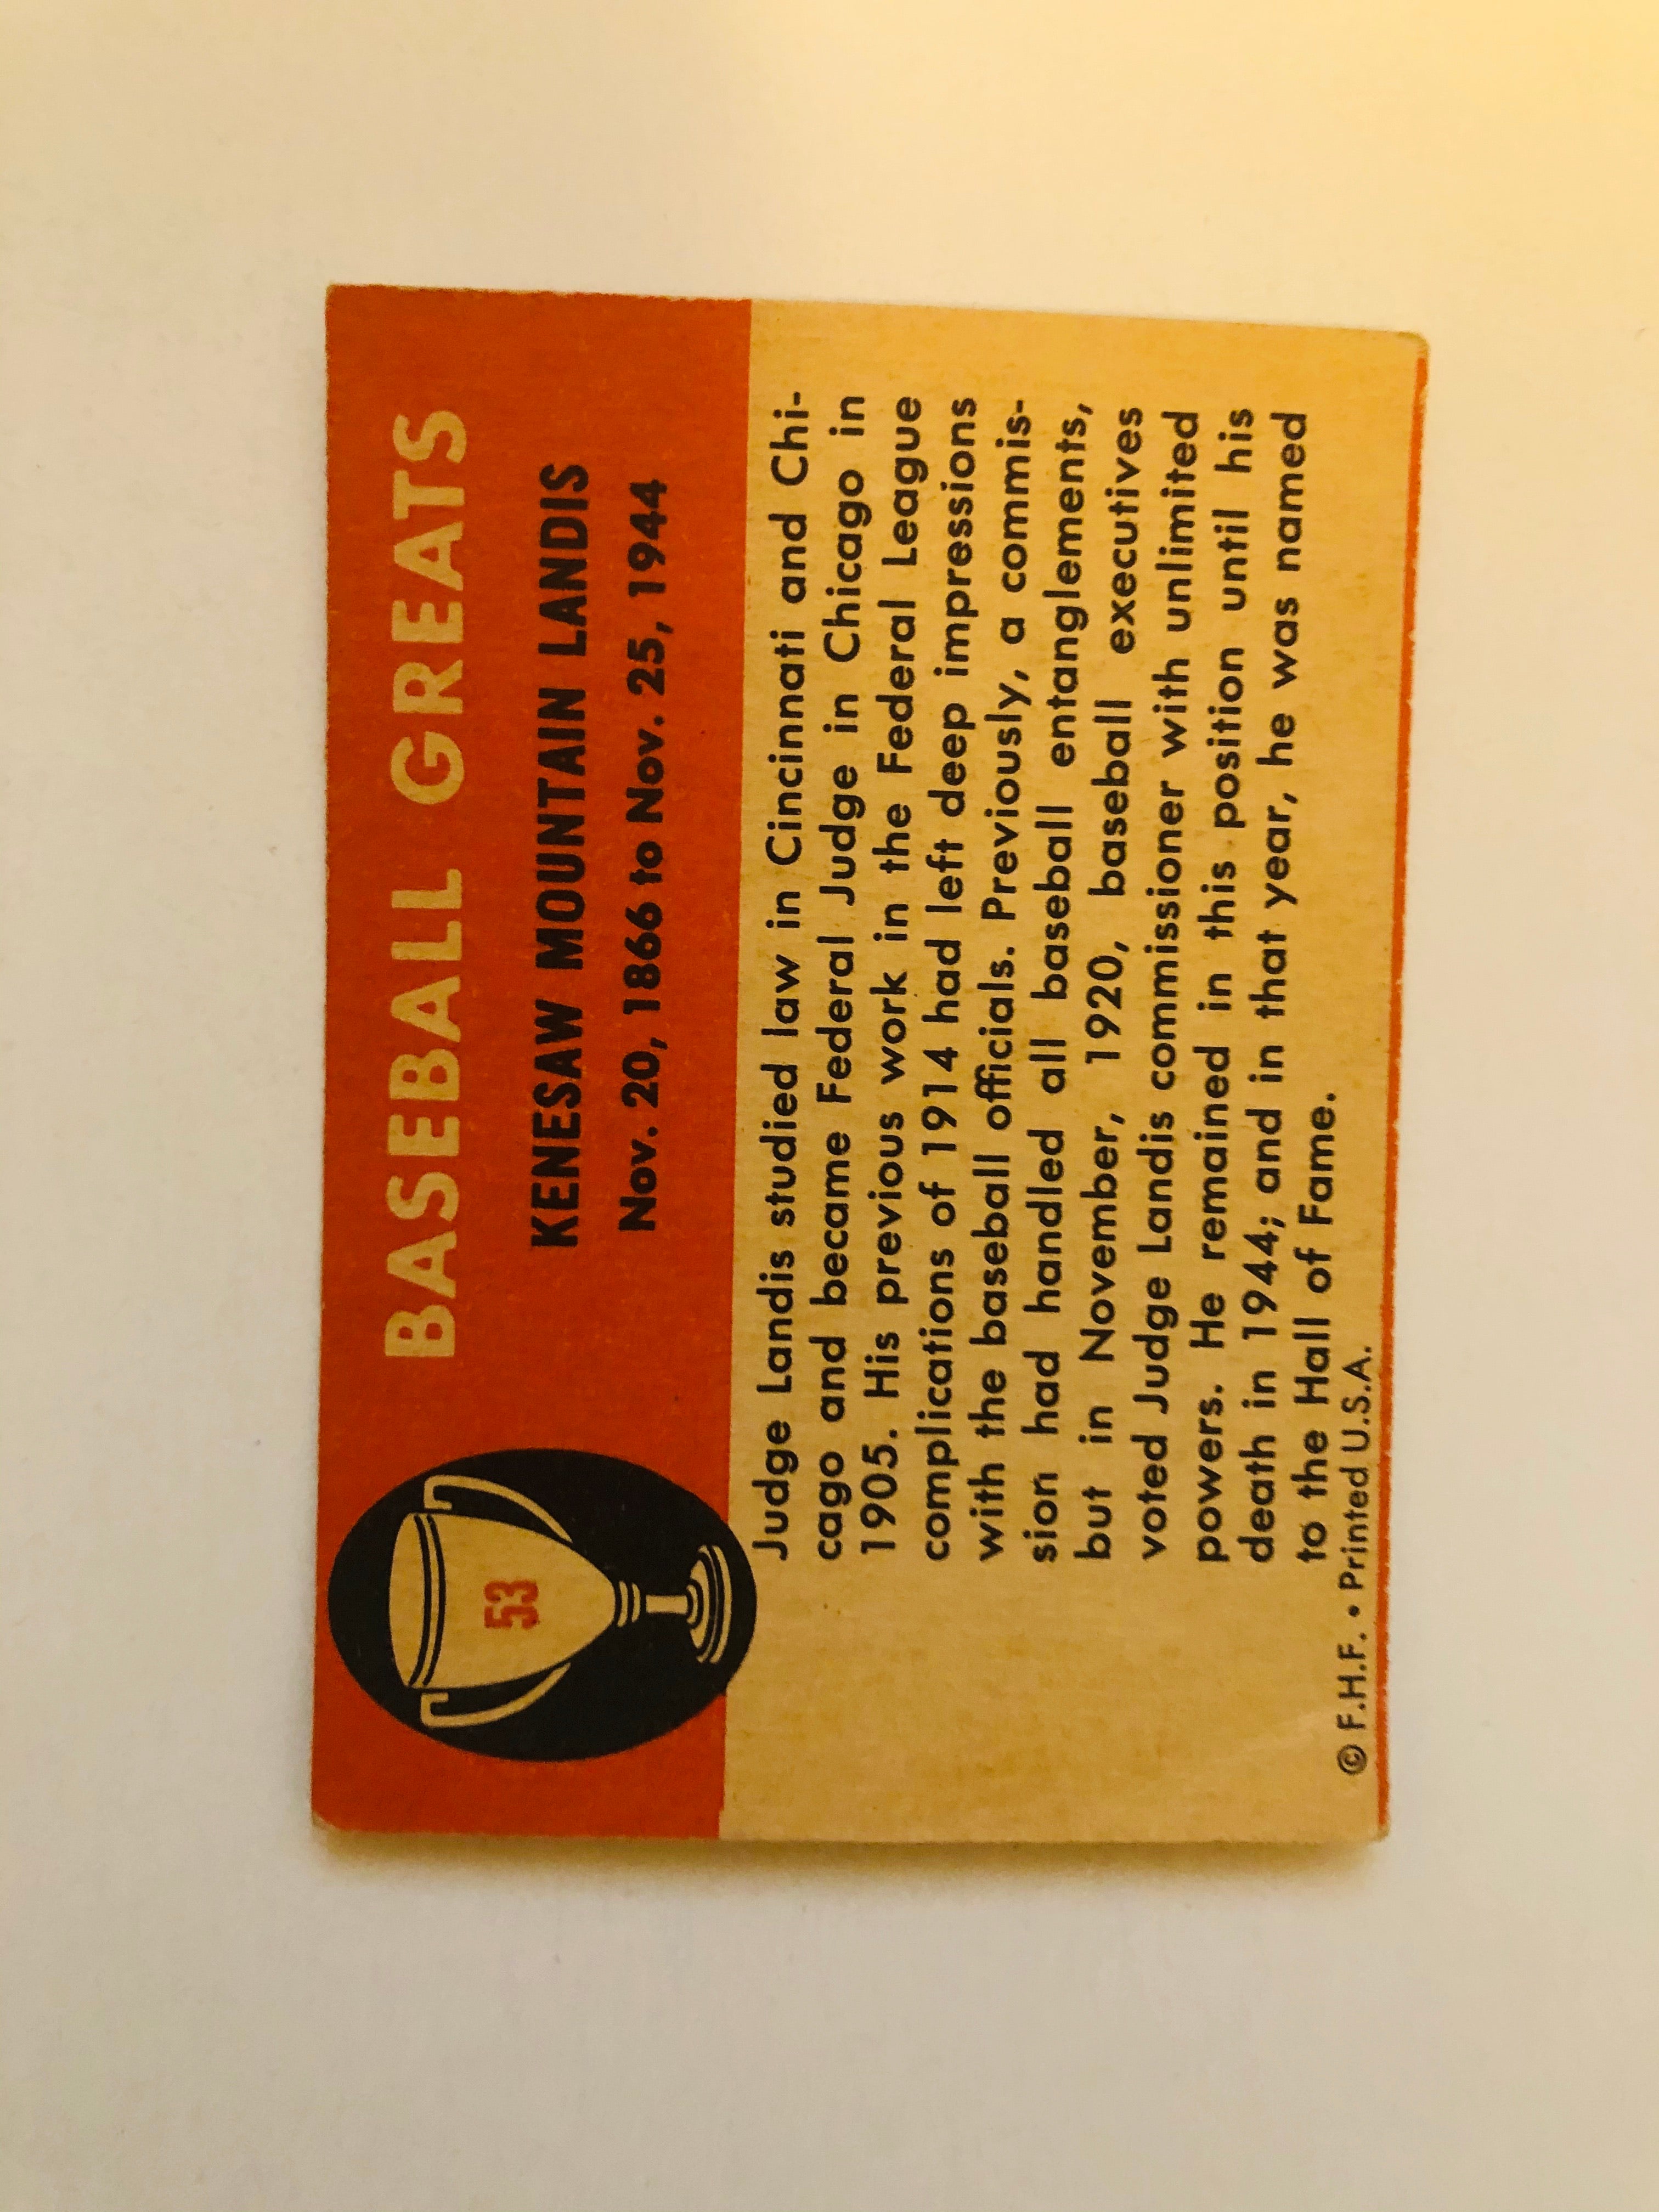 1961 Fleer Judge Landis rare baseball card